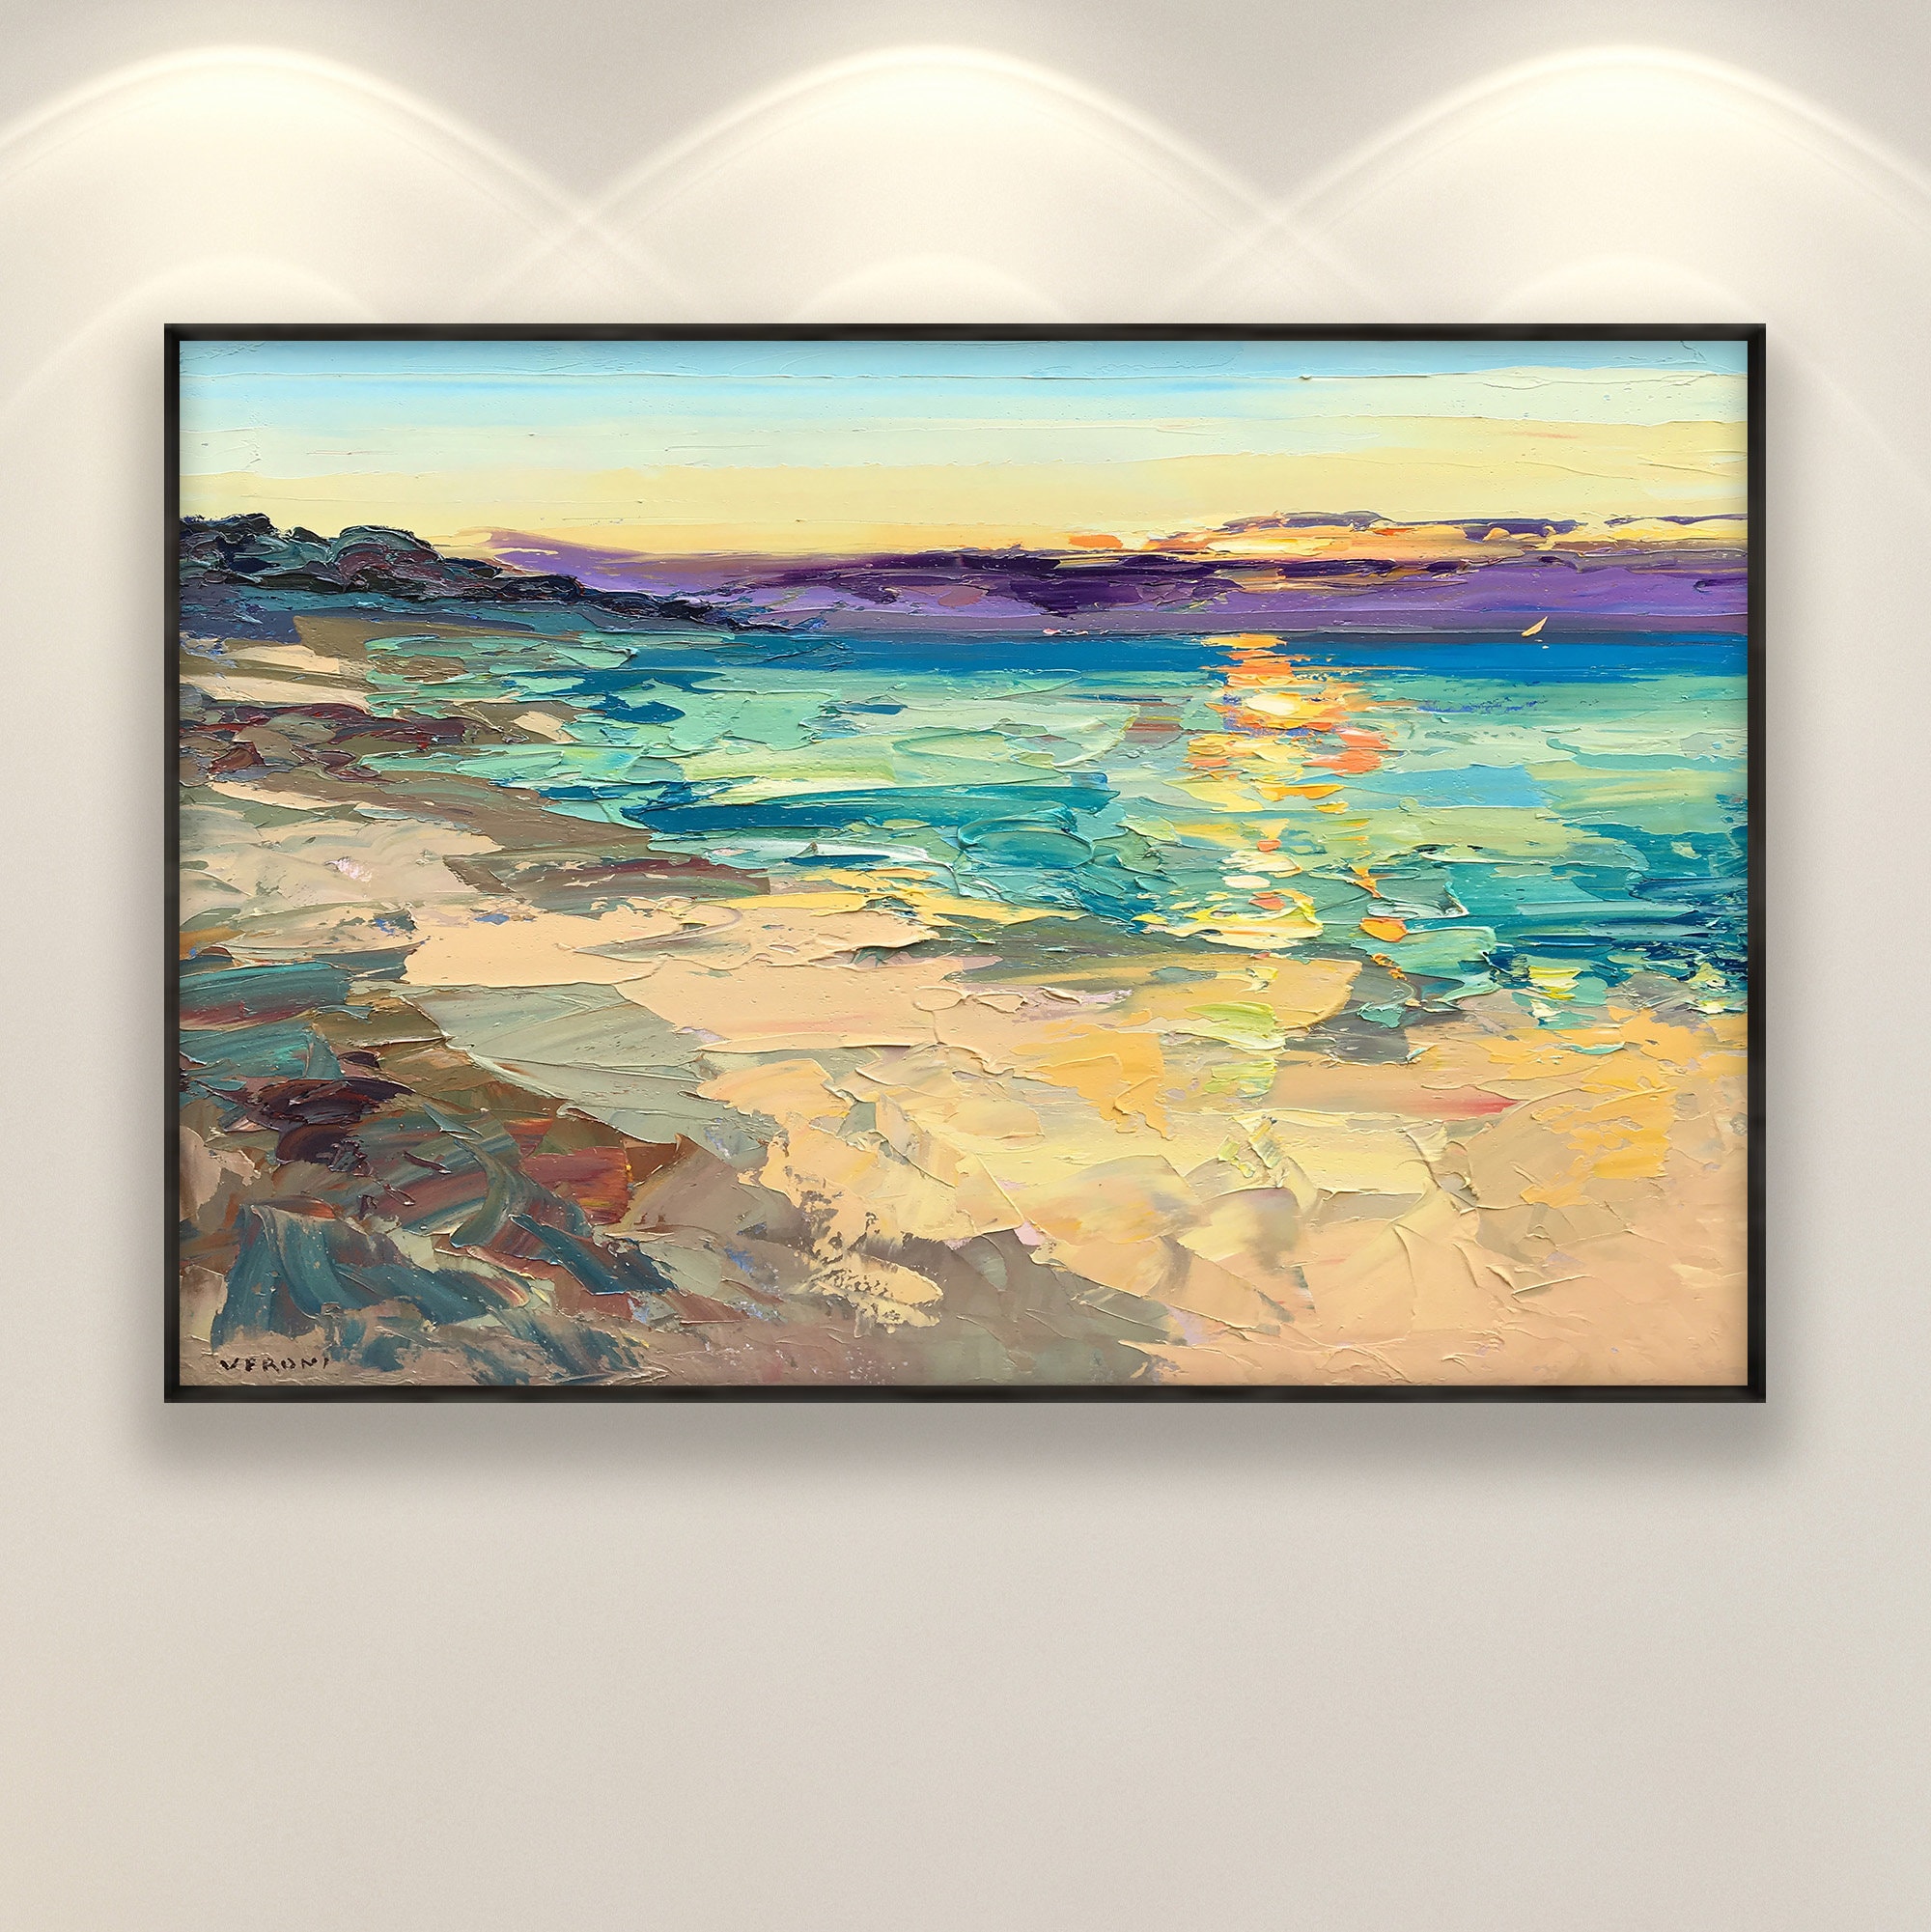 Original Acrylic Painting, Sunset Painting, Mini Painting, Set of 4 